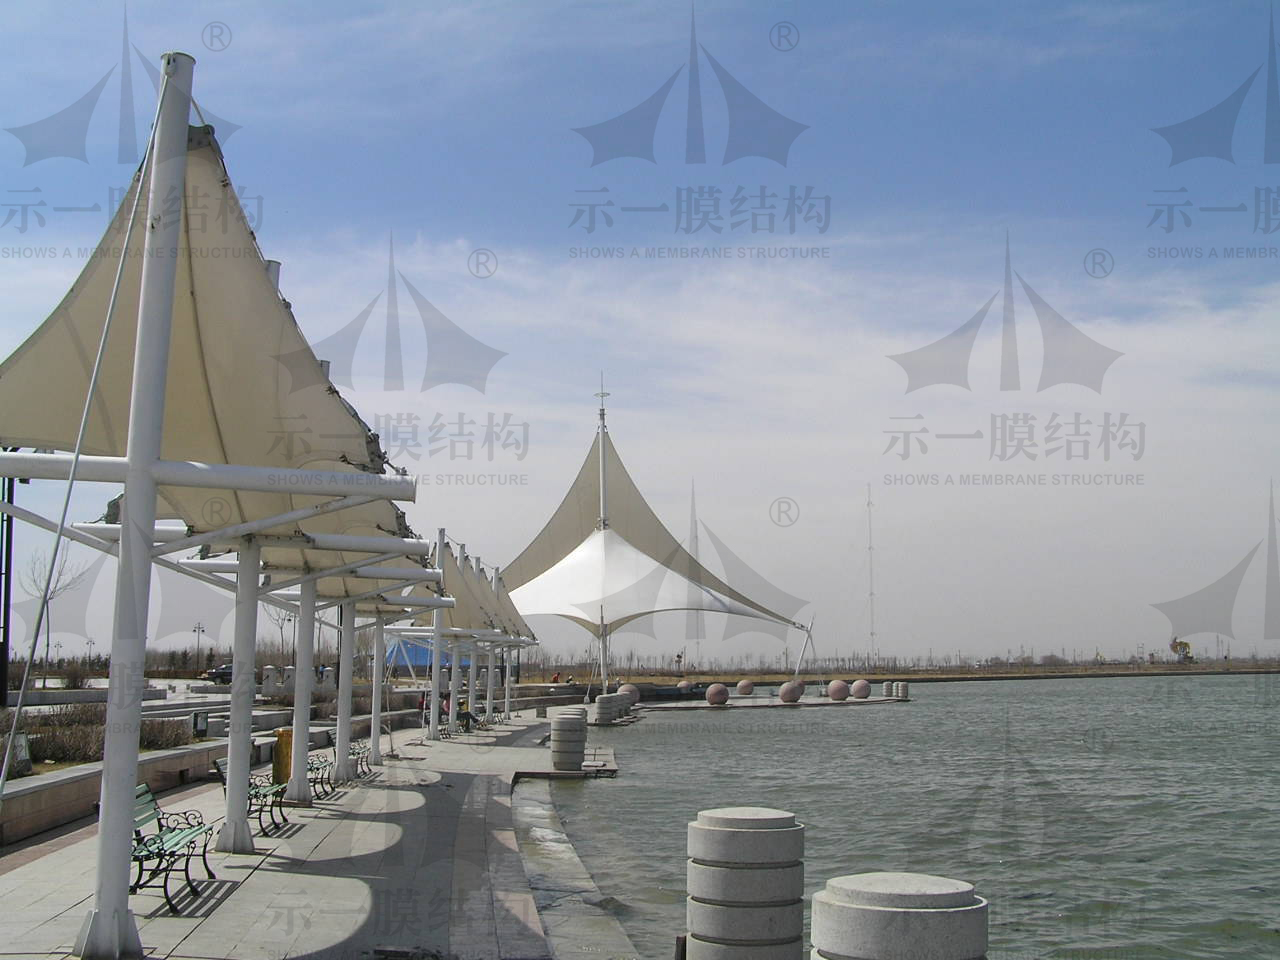 Wharf membrane structure and wharf culture